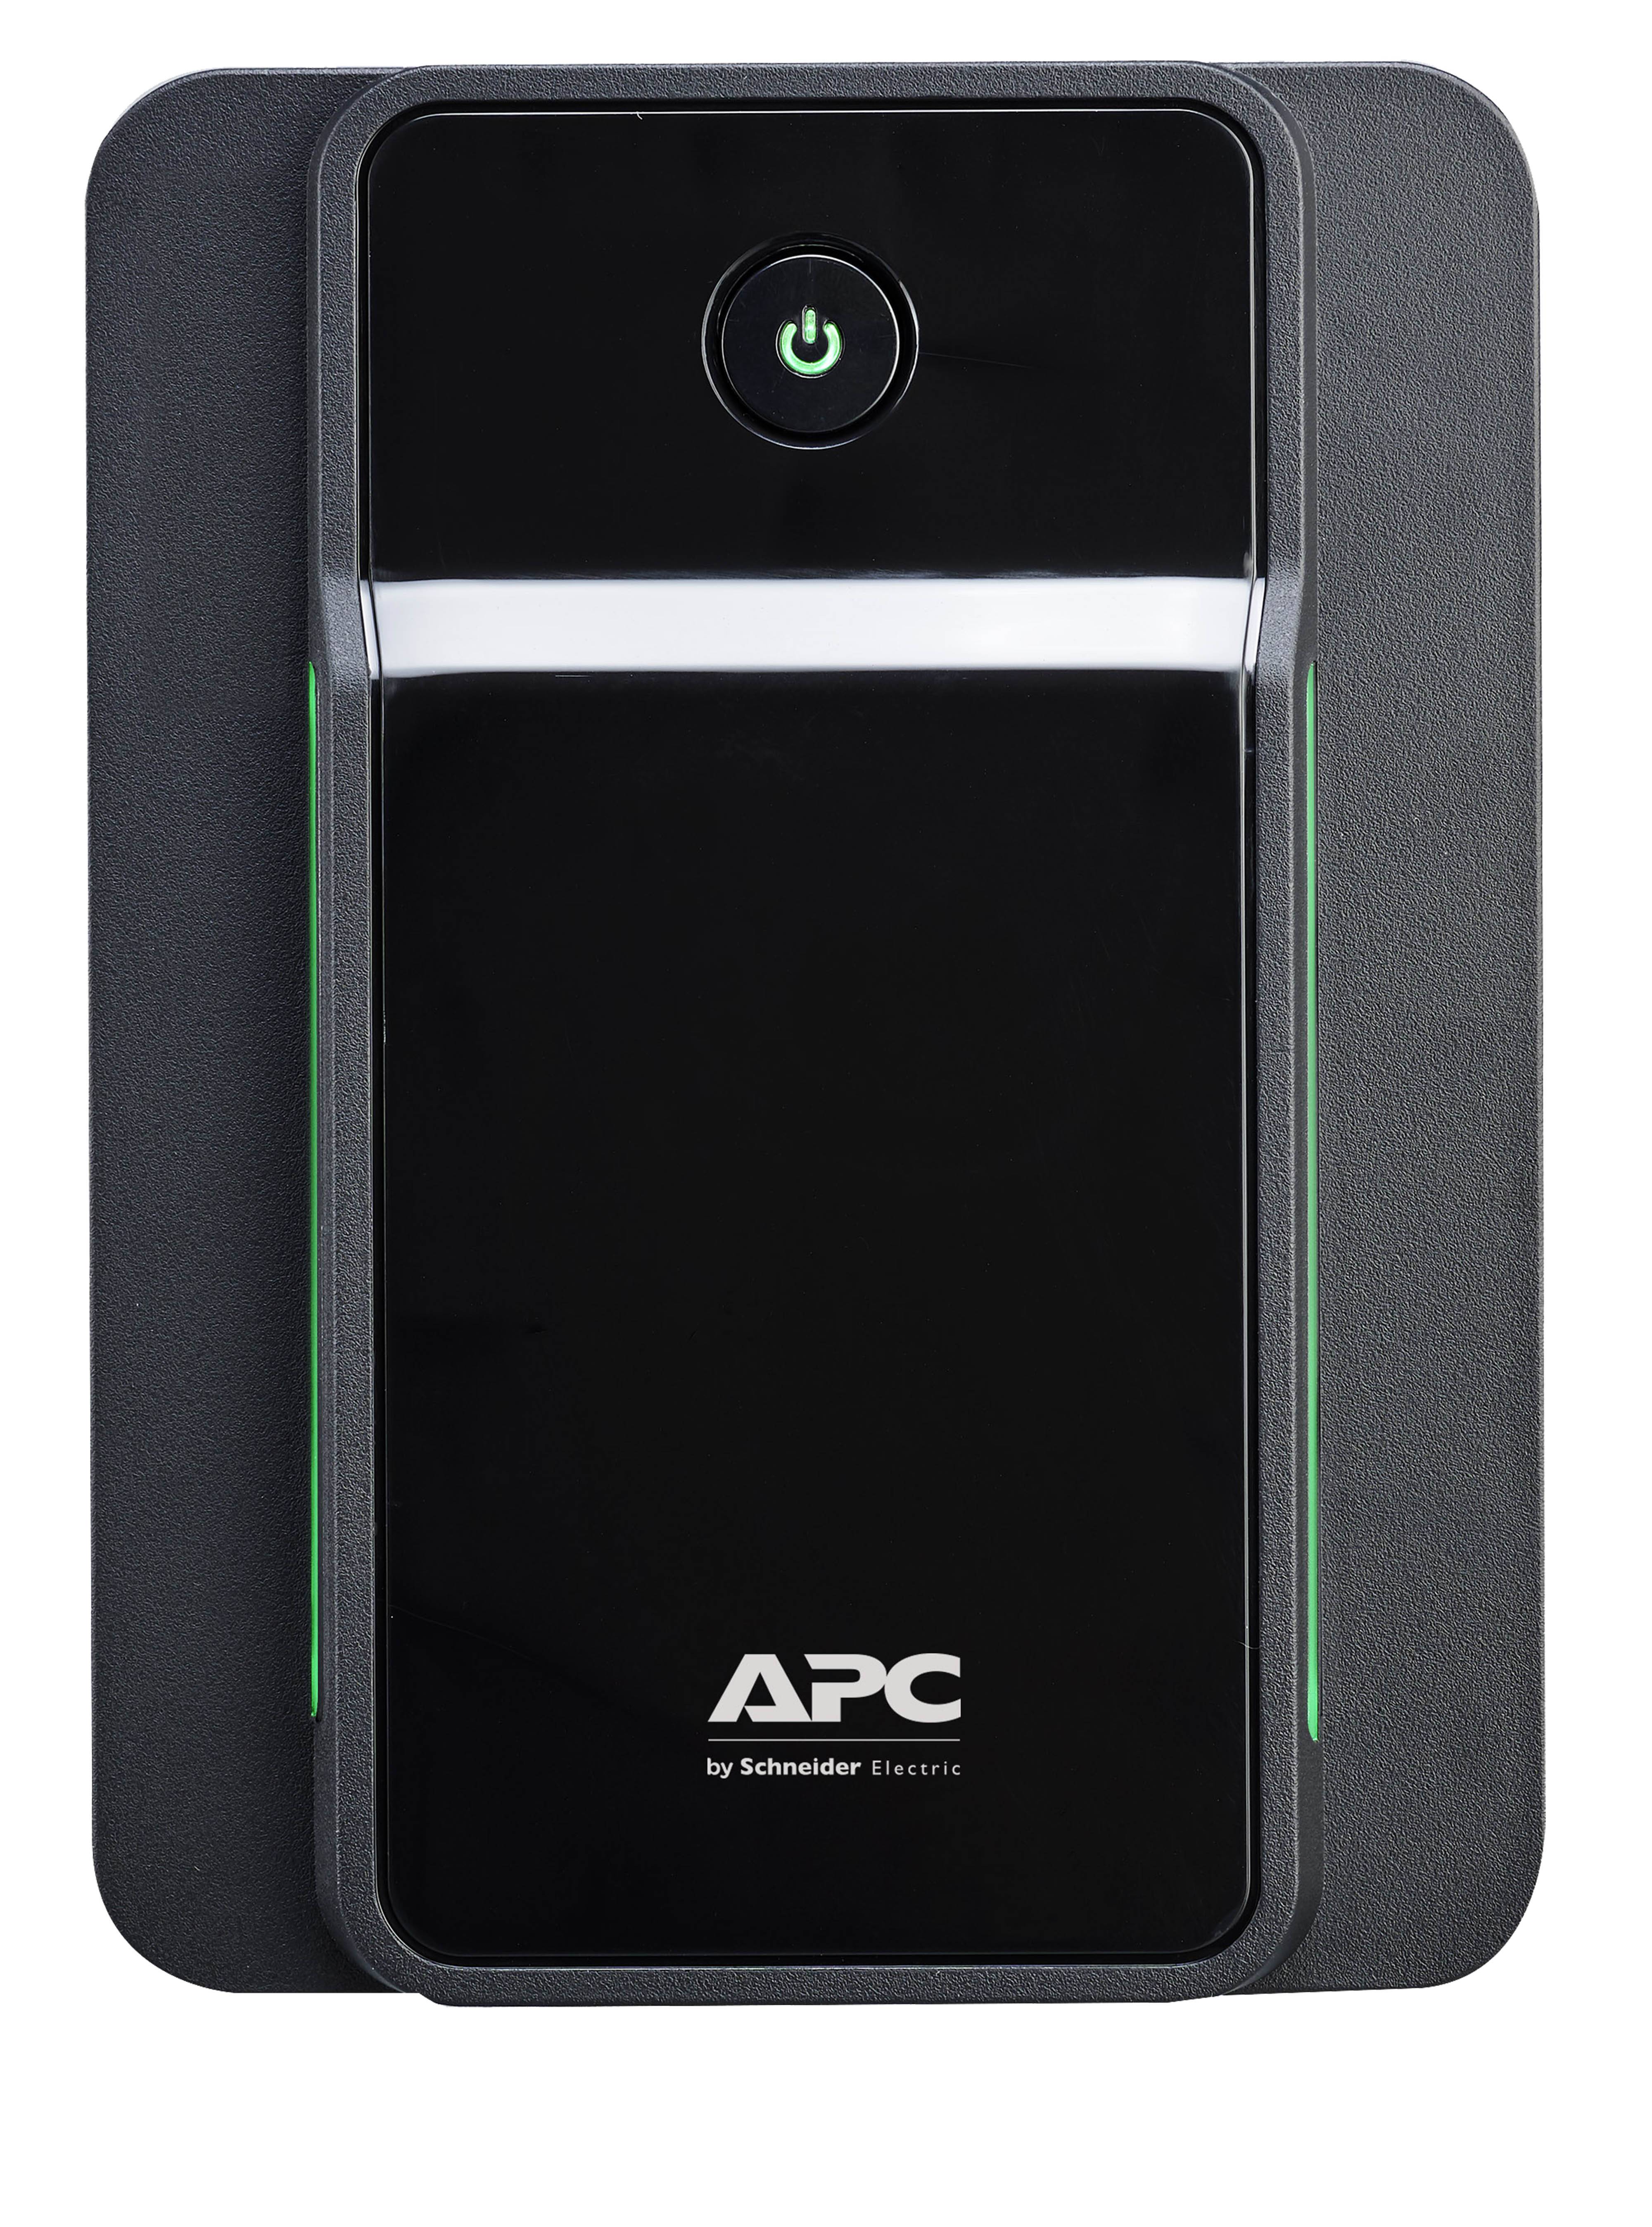 Rca Informatique - image du produit : APC BACK-UPS 1600VA 230V AVR FRENCH SOCKETS